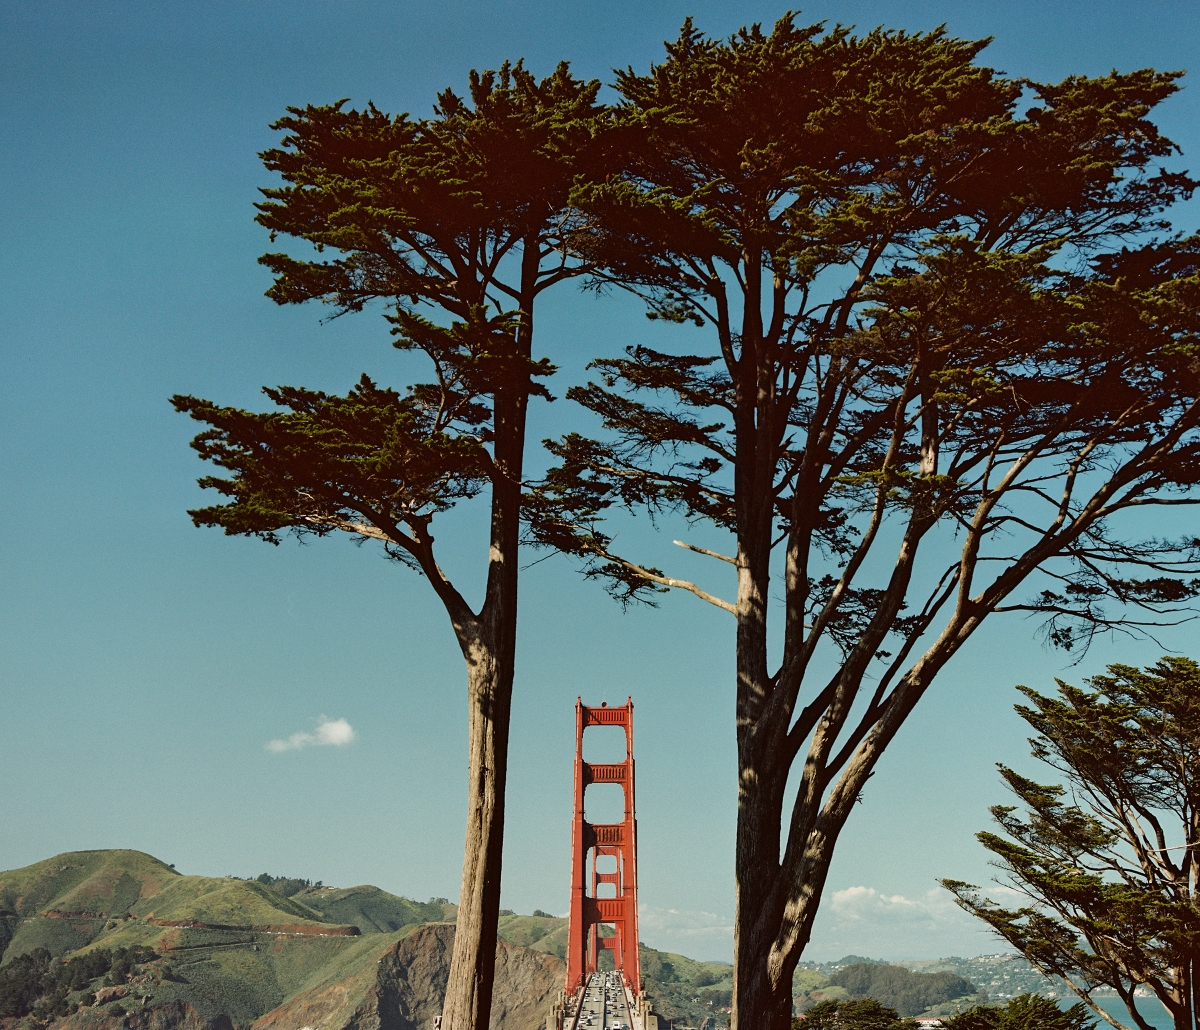 Golden Gate Bridge and Cypress Trees